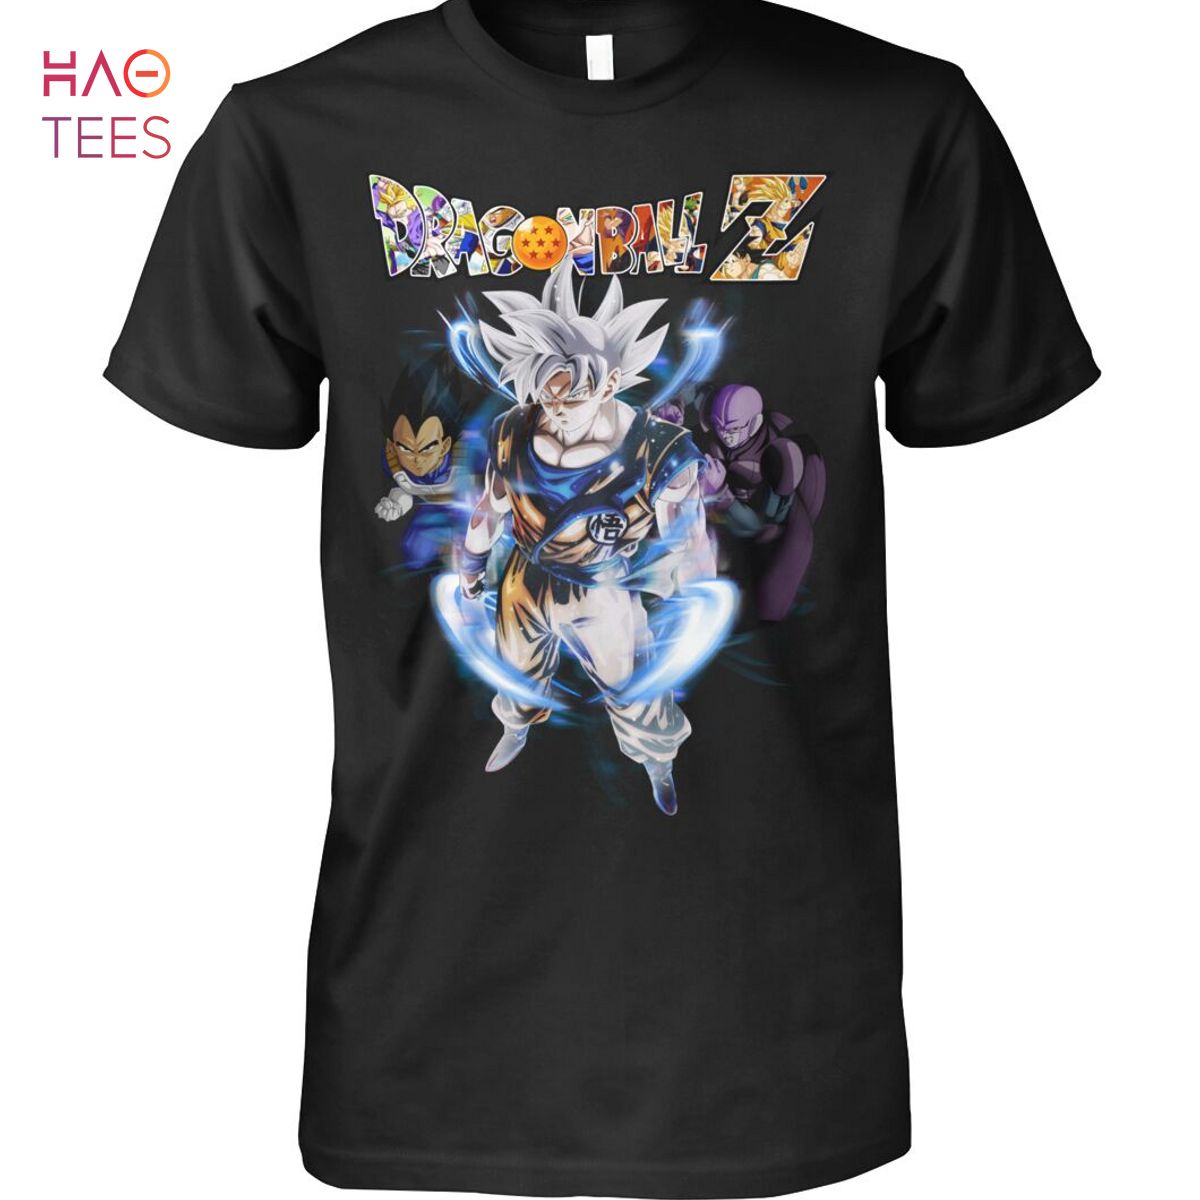 Dragonball Z Shirt Limited Edition